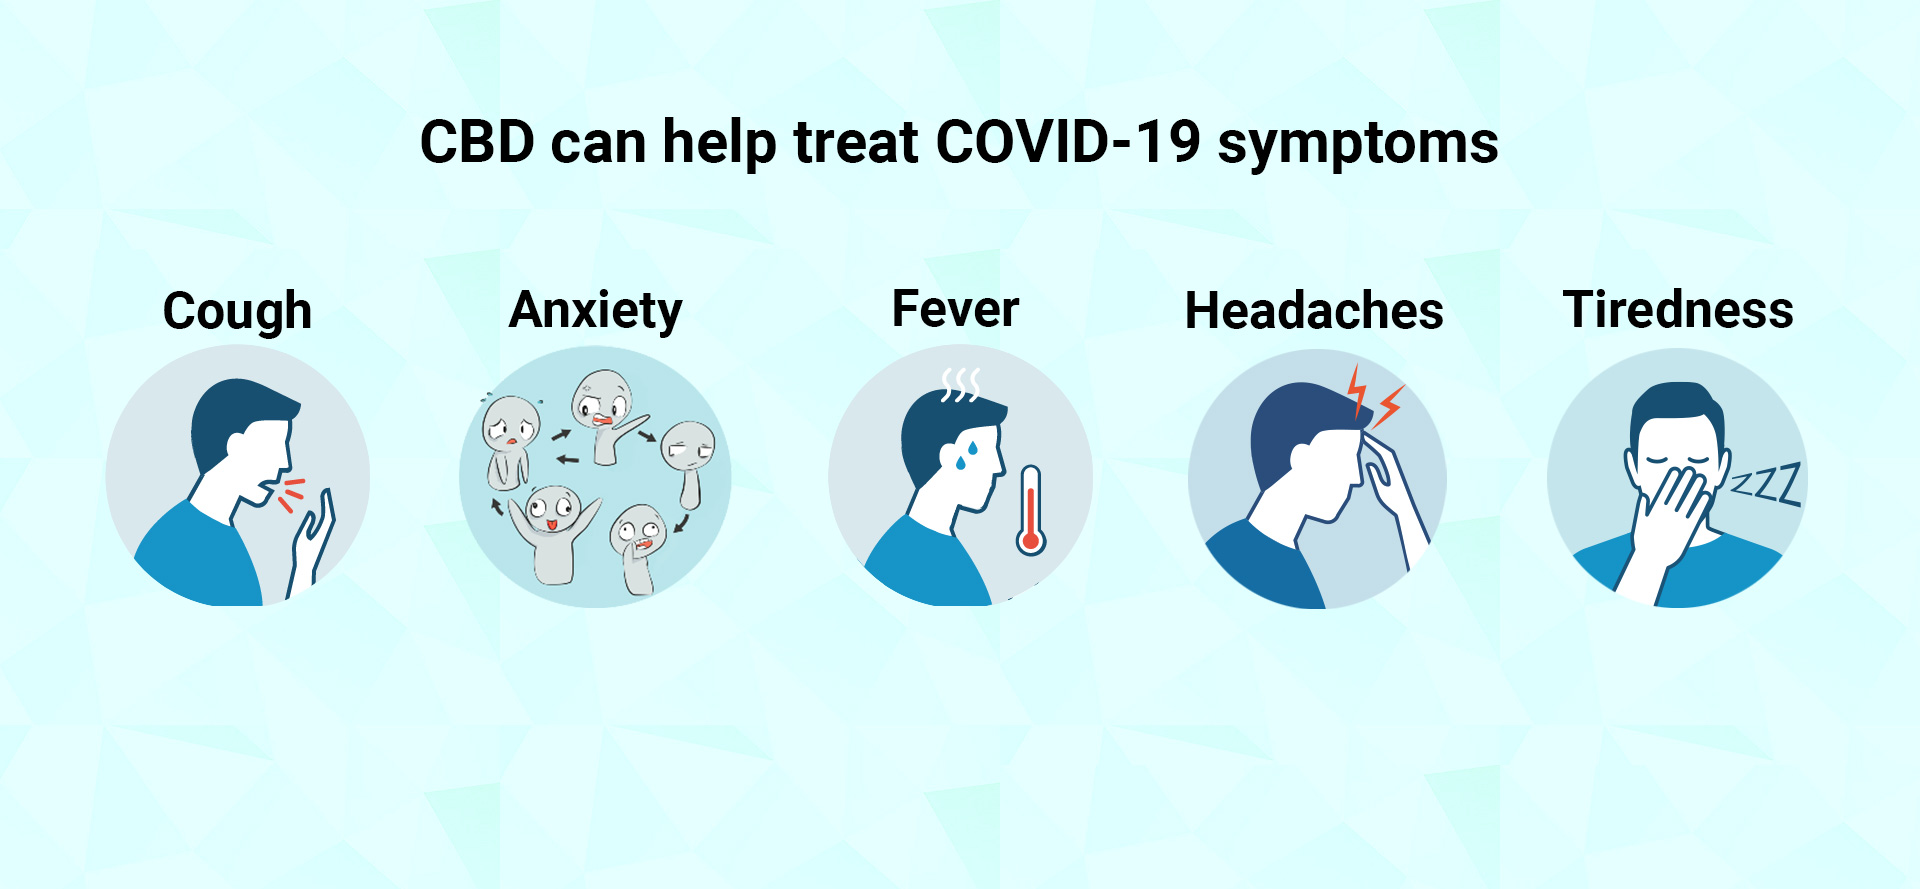 Covid symptoms that CBD can help treat.